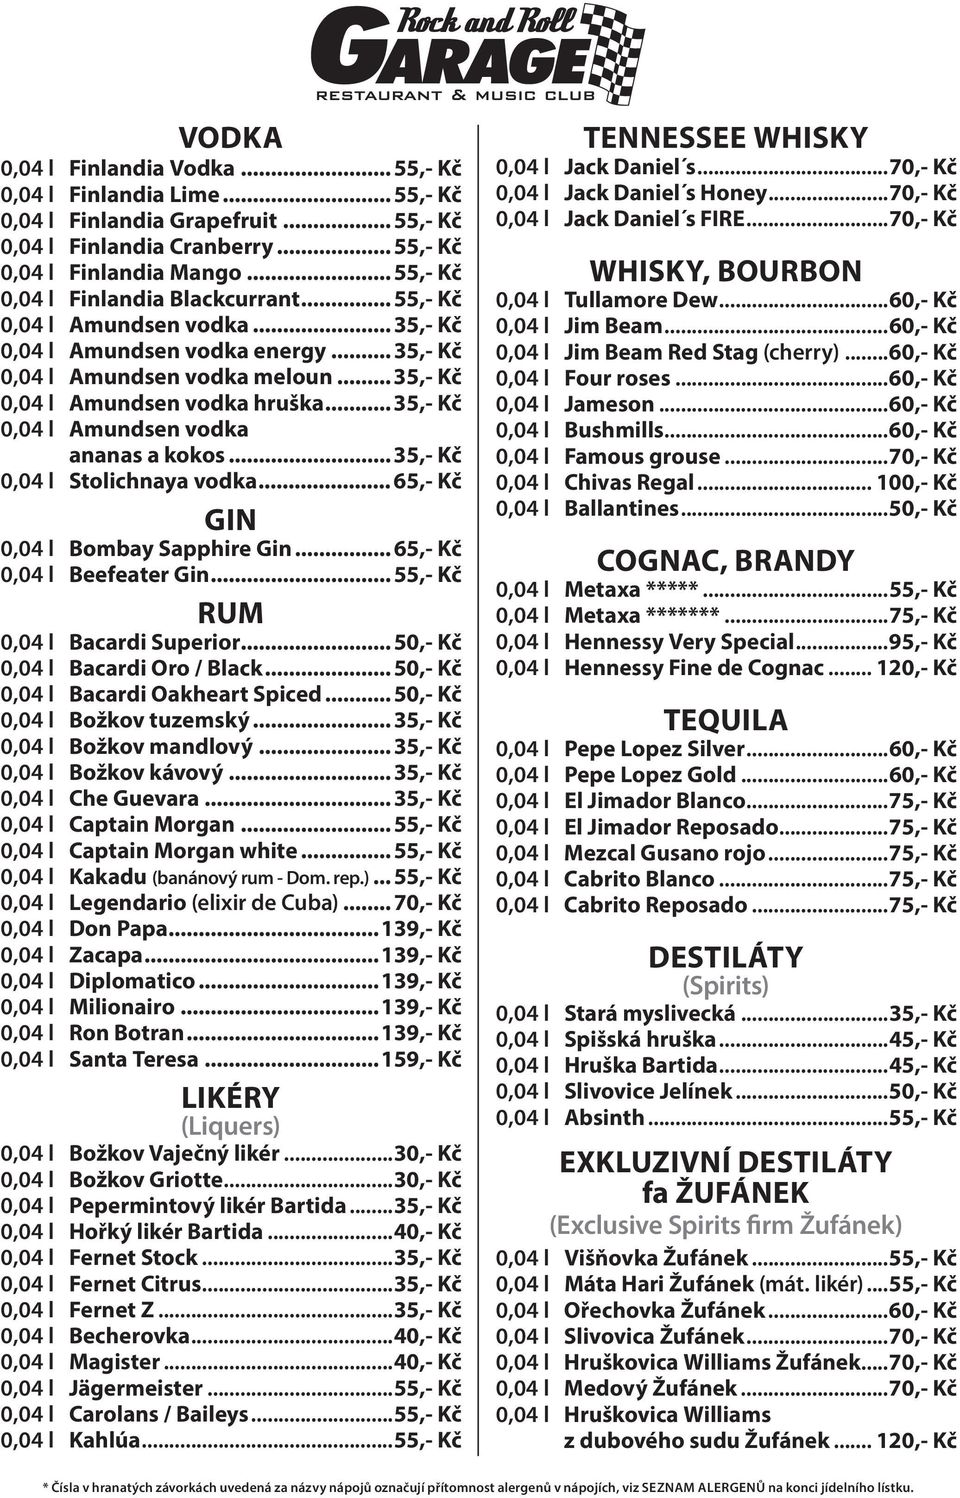 .. 35,- Kč 0,04 l Amundsen vodka ananas a kokos... 35,- Kč 0,04 l Stolichnaya vodka... 65,- Kč Gin 0,04 l Bombay Sapphire Gin... 65,- Kč 0,04 l Beefeater Gin... 55,- Kč Rum 0,04 l Bacardi Superior.